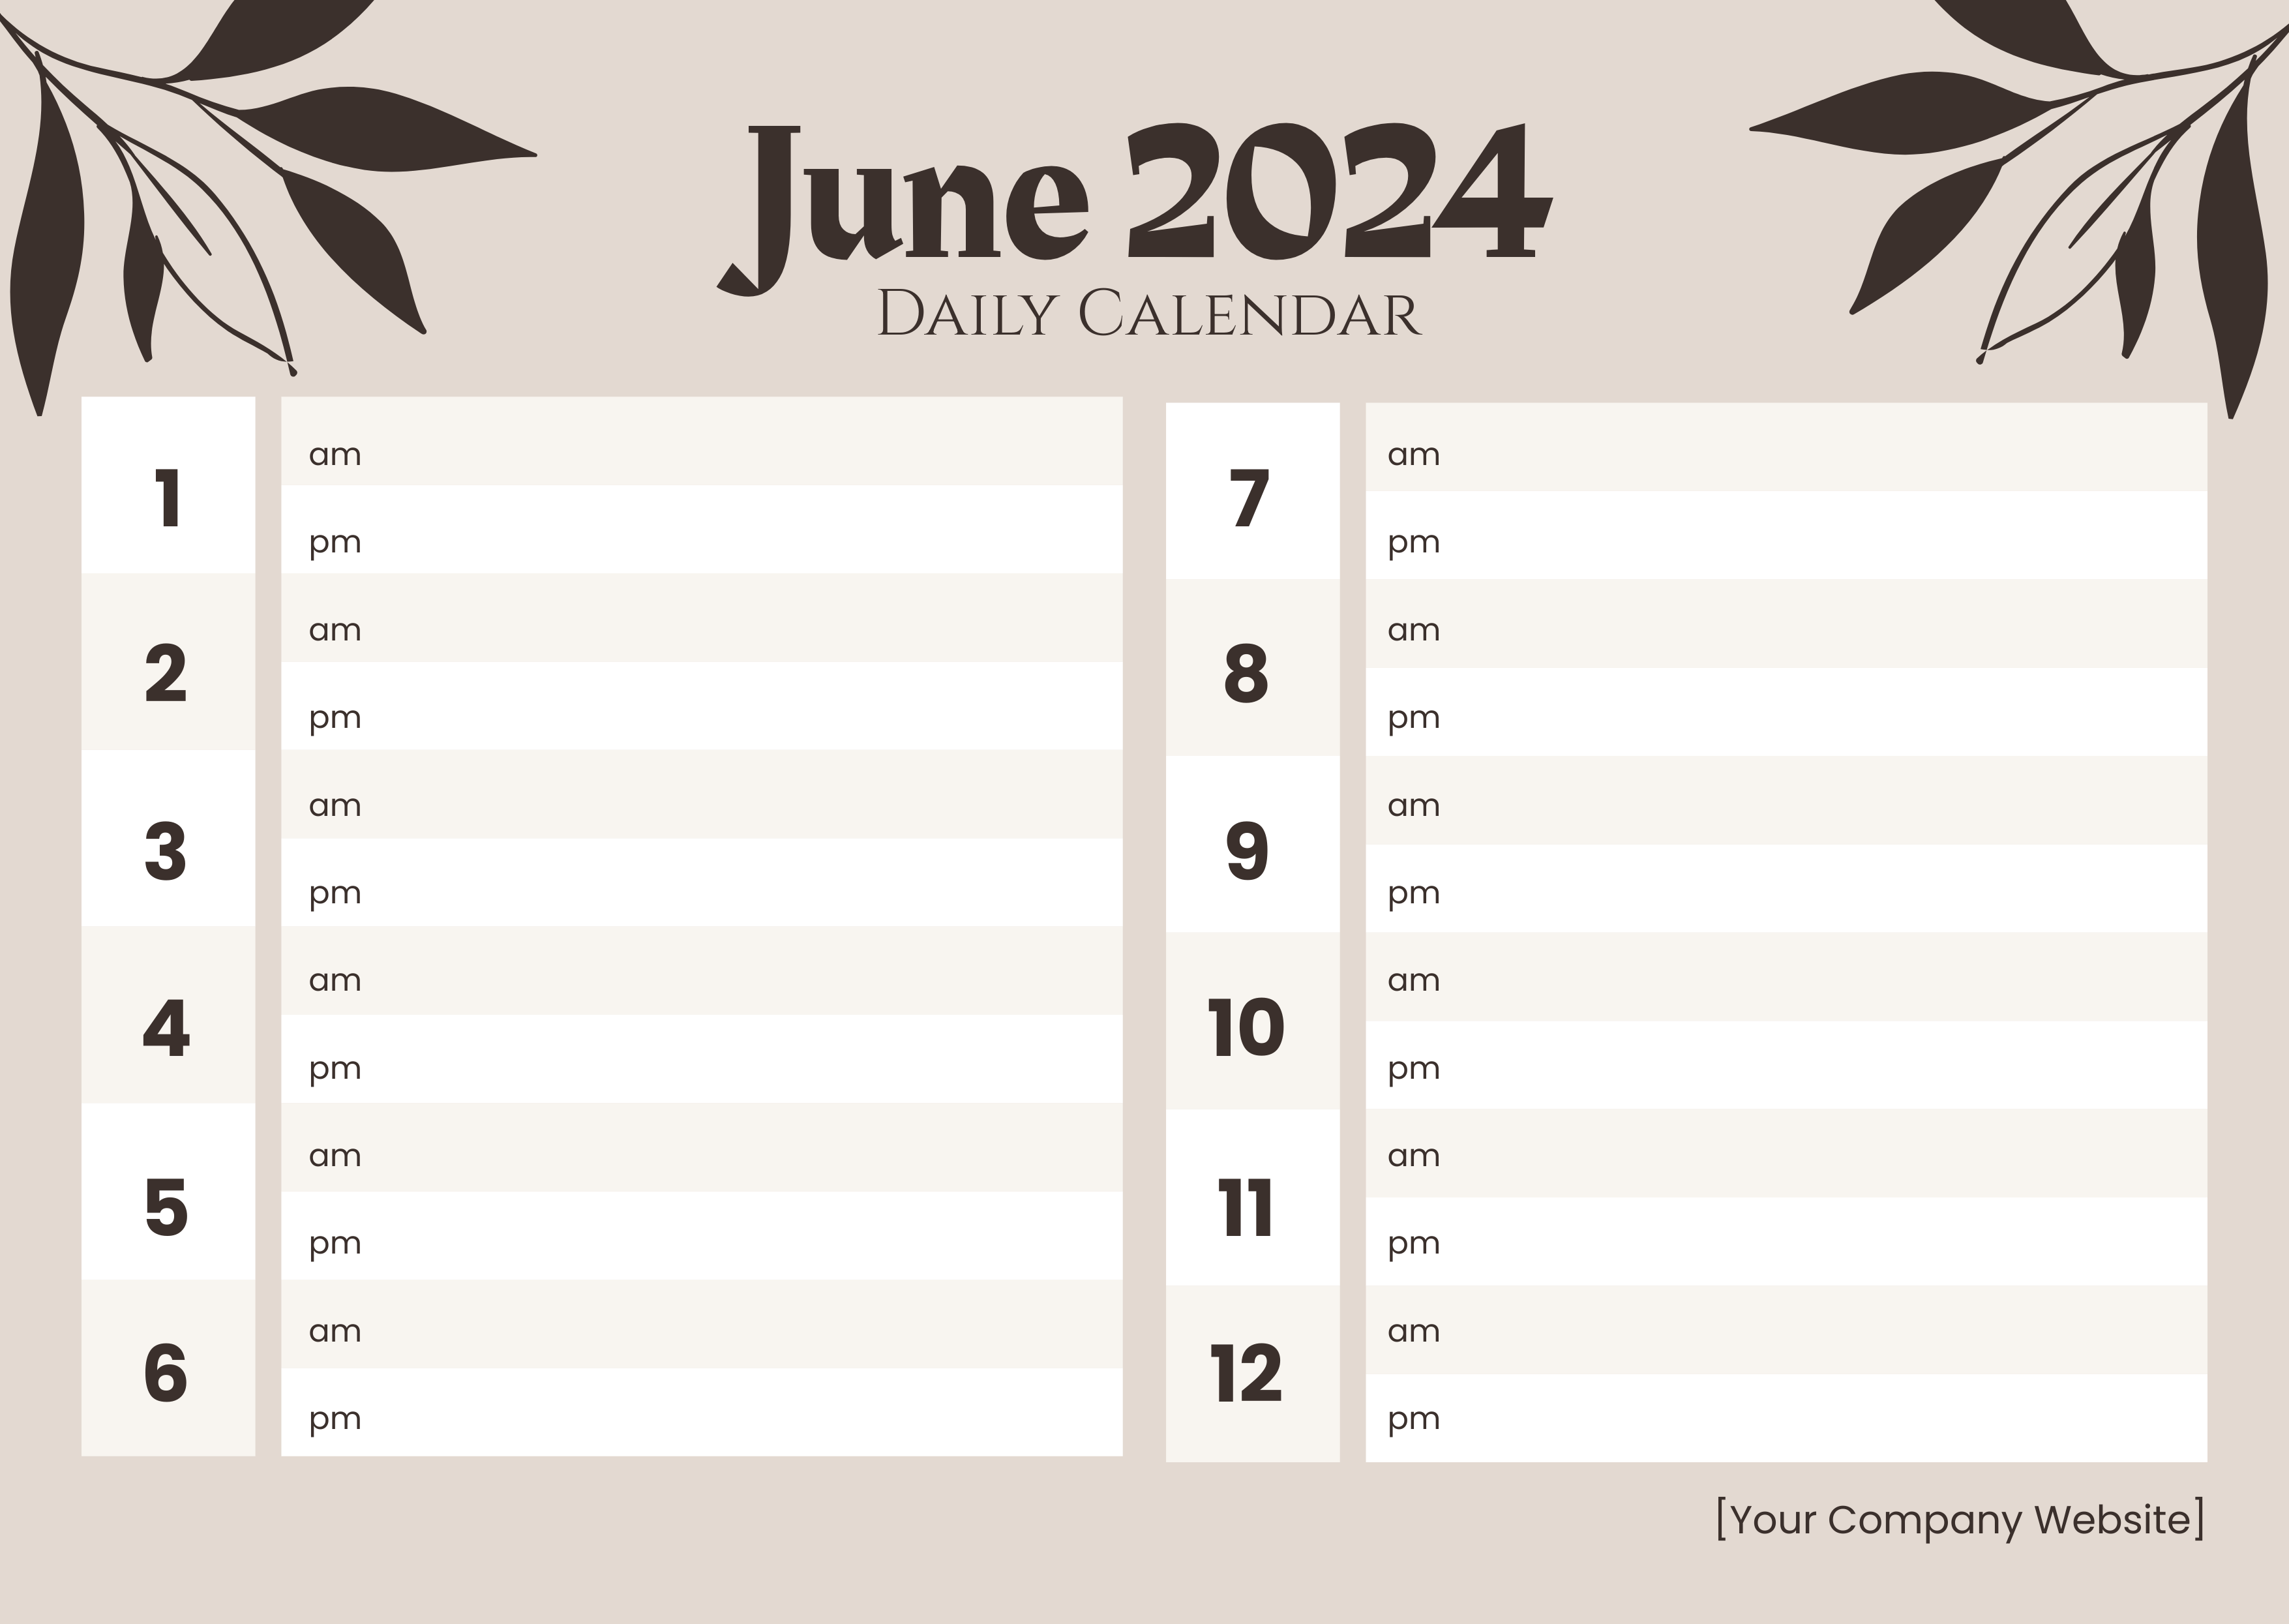 Daily Calendar 2024 June Template - Edit Online &amp;amp; Download Example pertaining to June Daily Calendar 2024